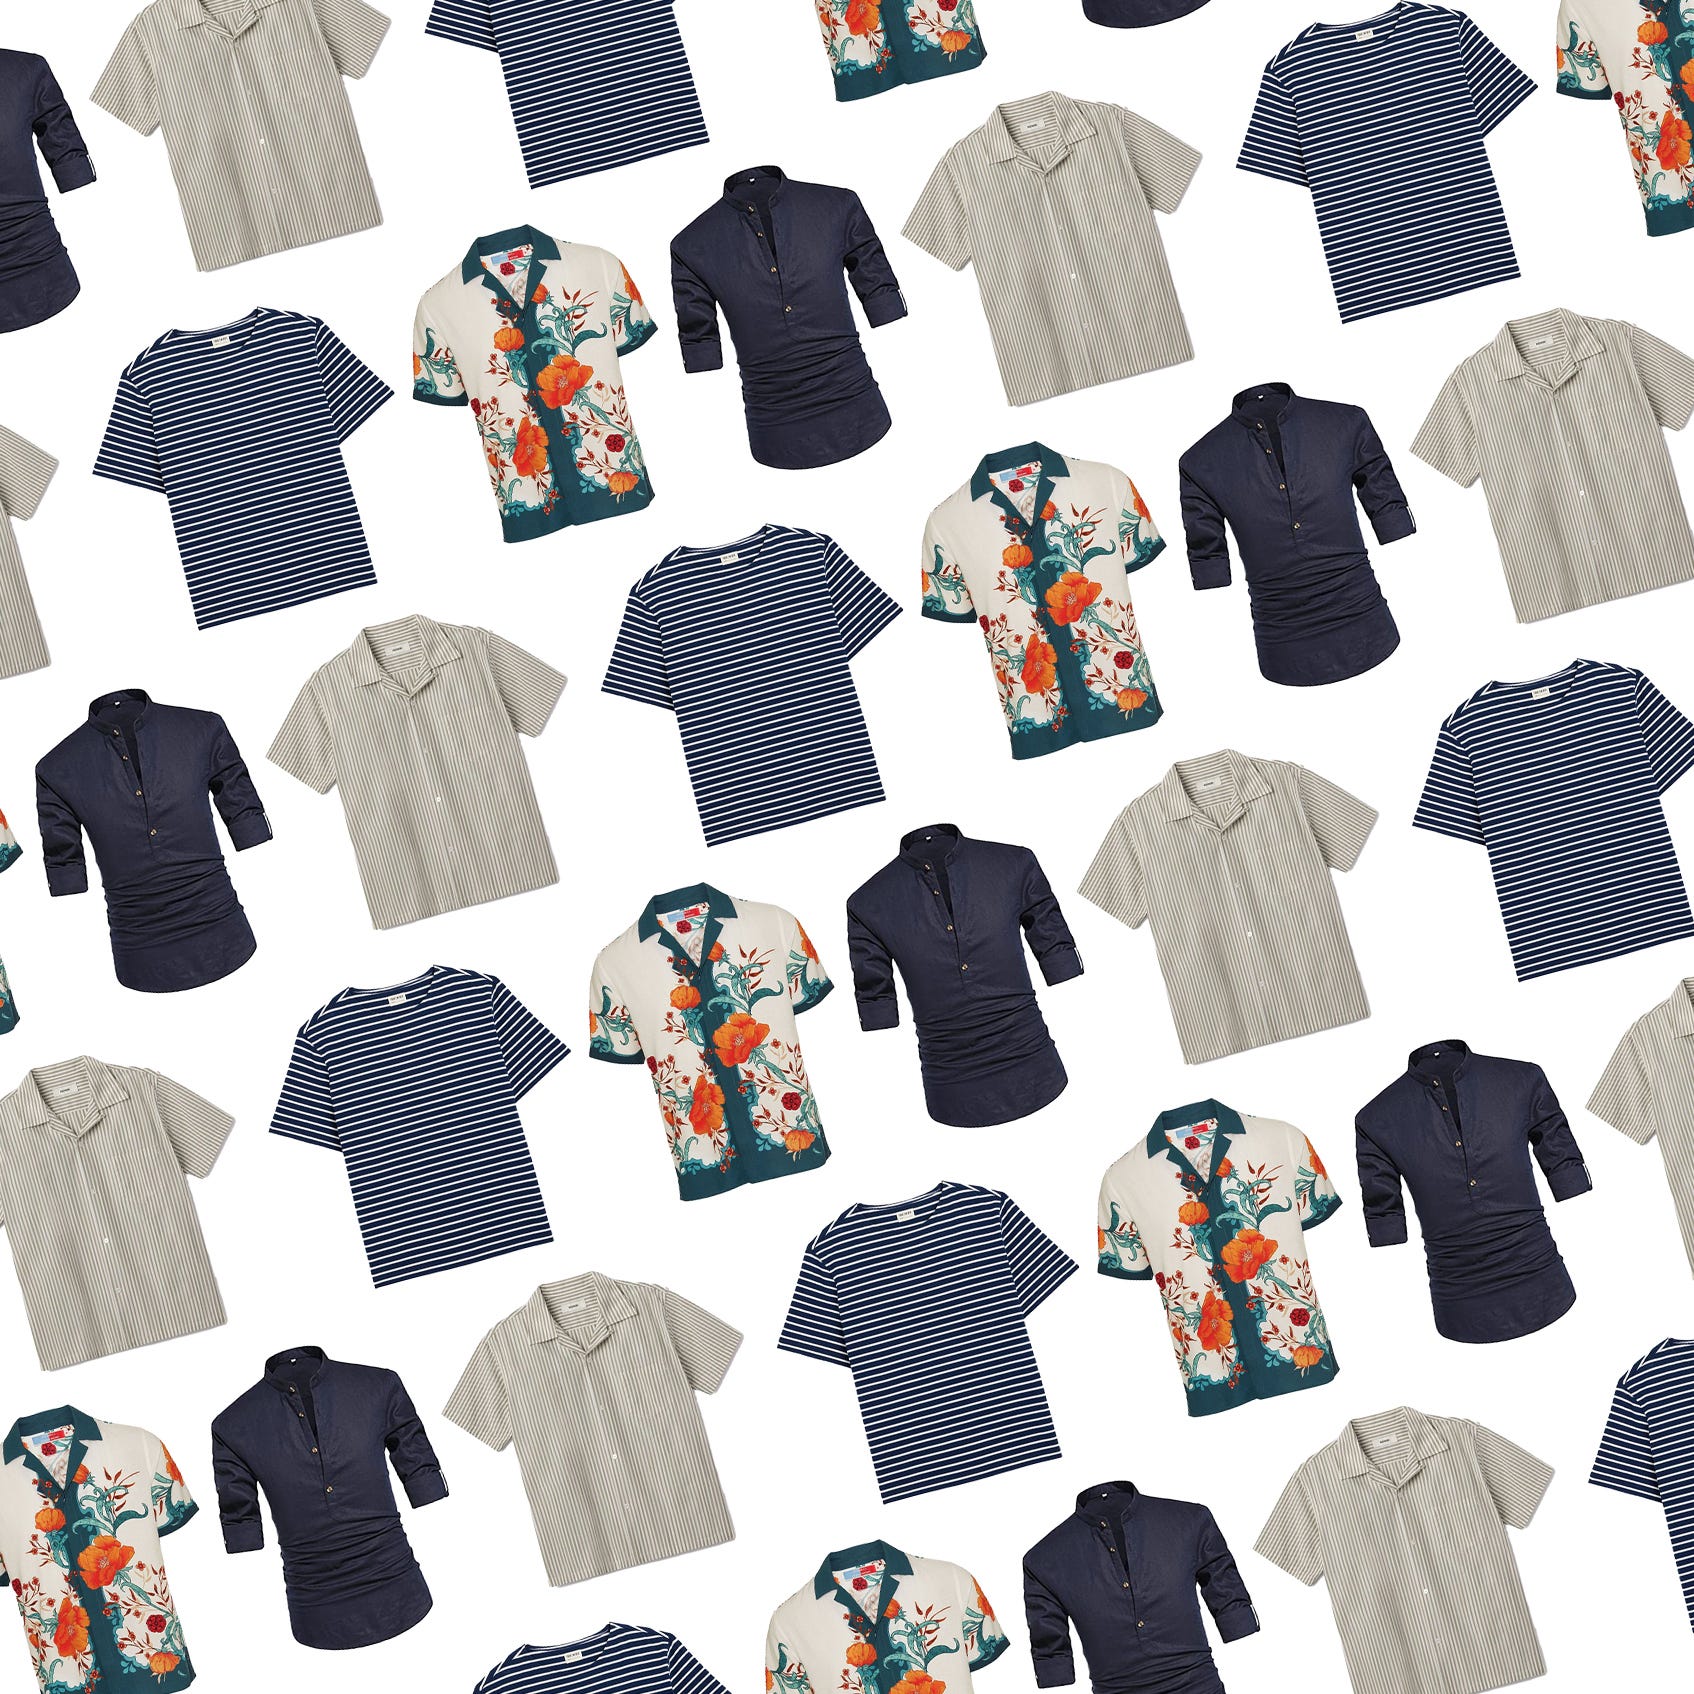 25 Shirts That Belong in Every Man's Summer Wardrobe